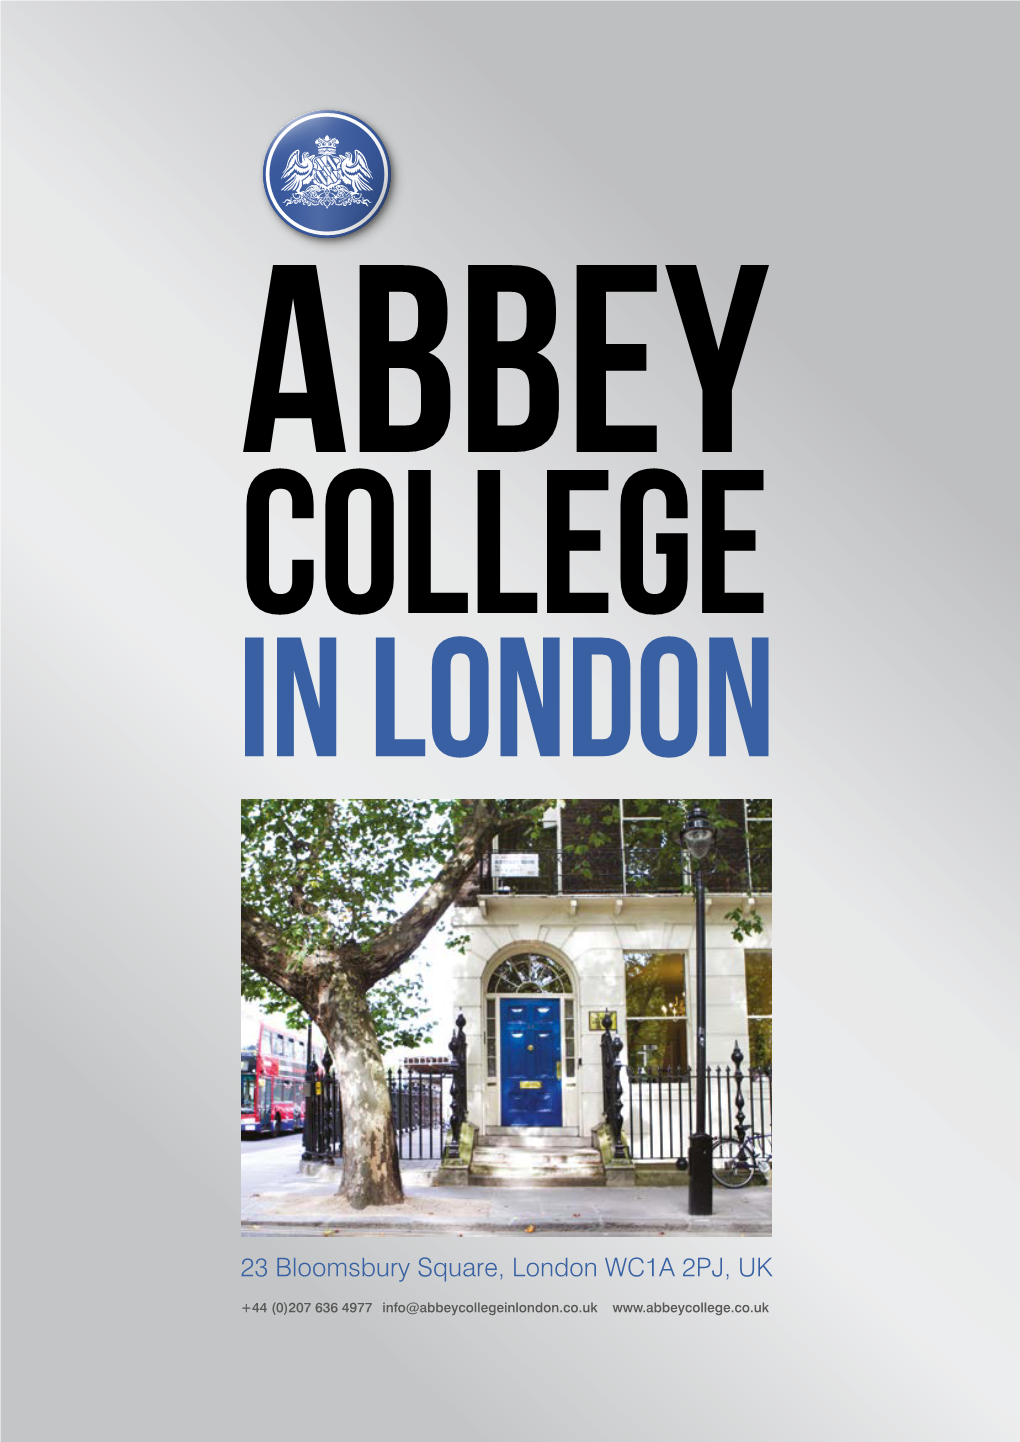 ABBEY COLLEGE in London